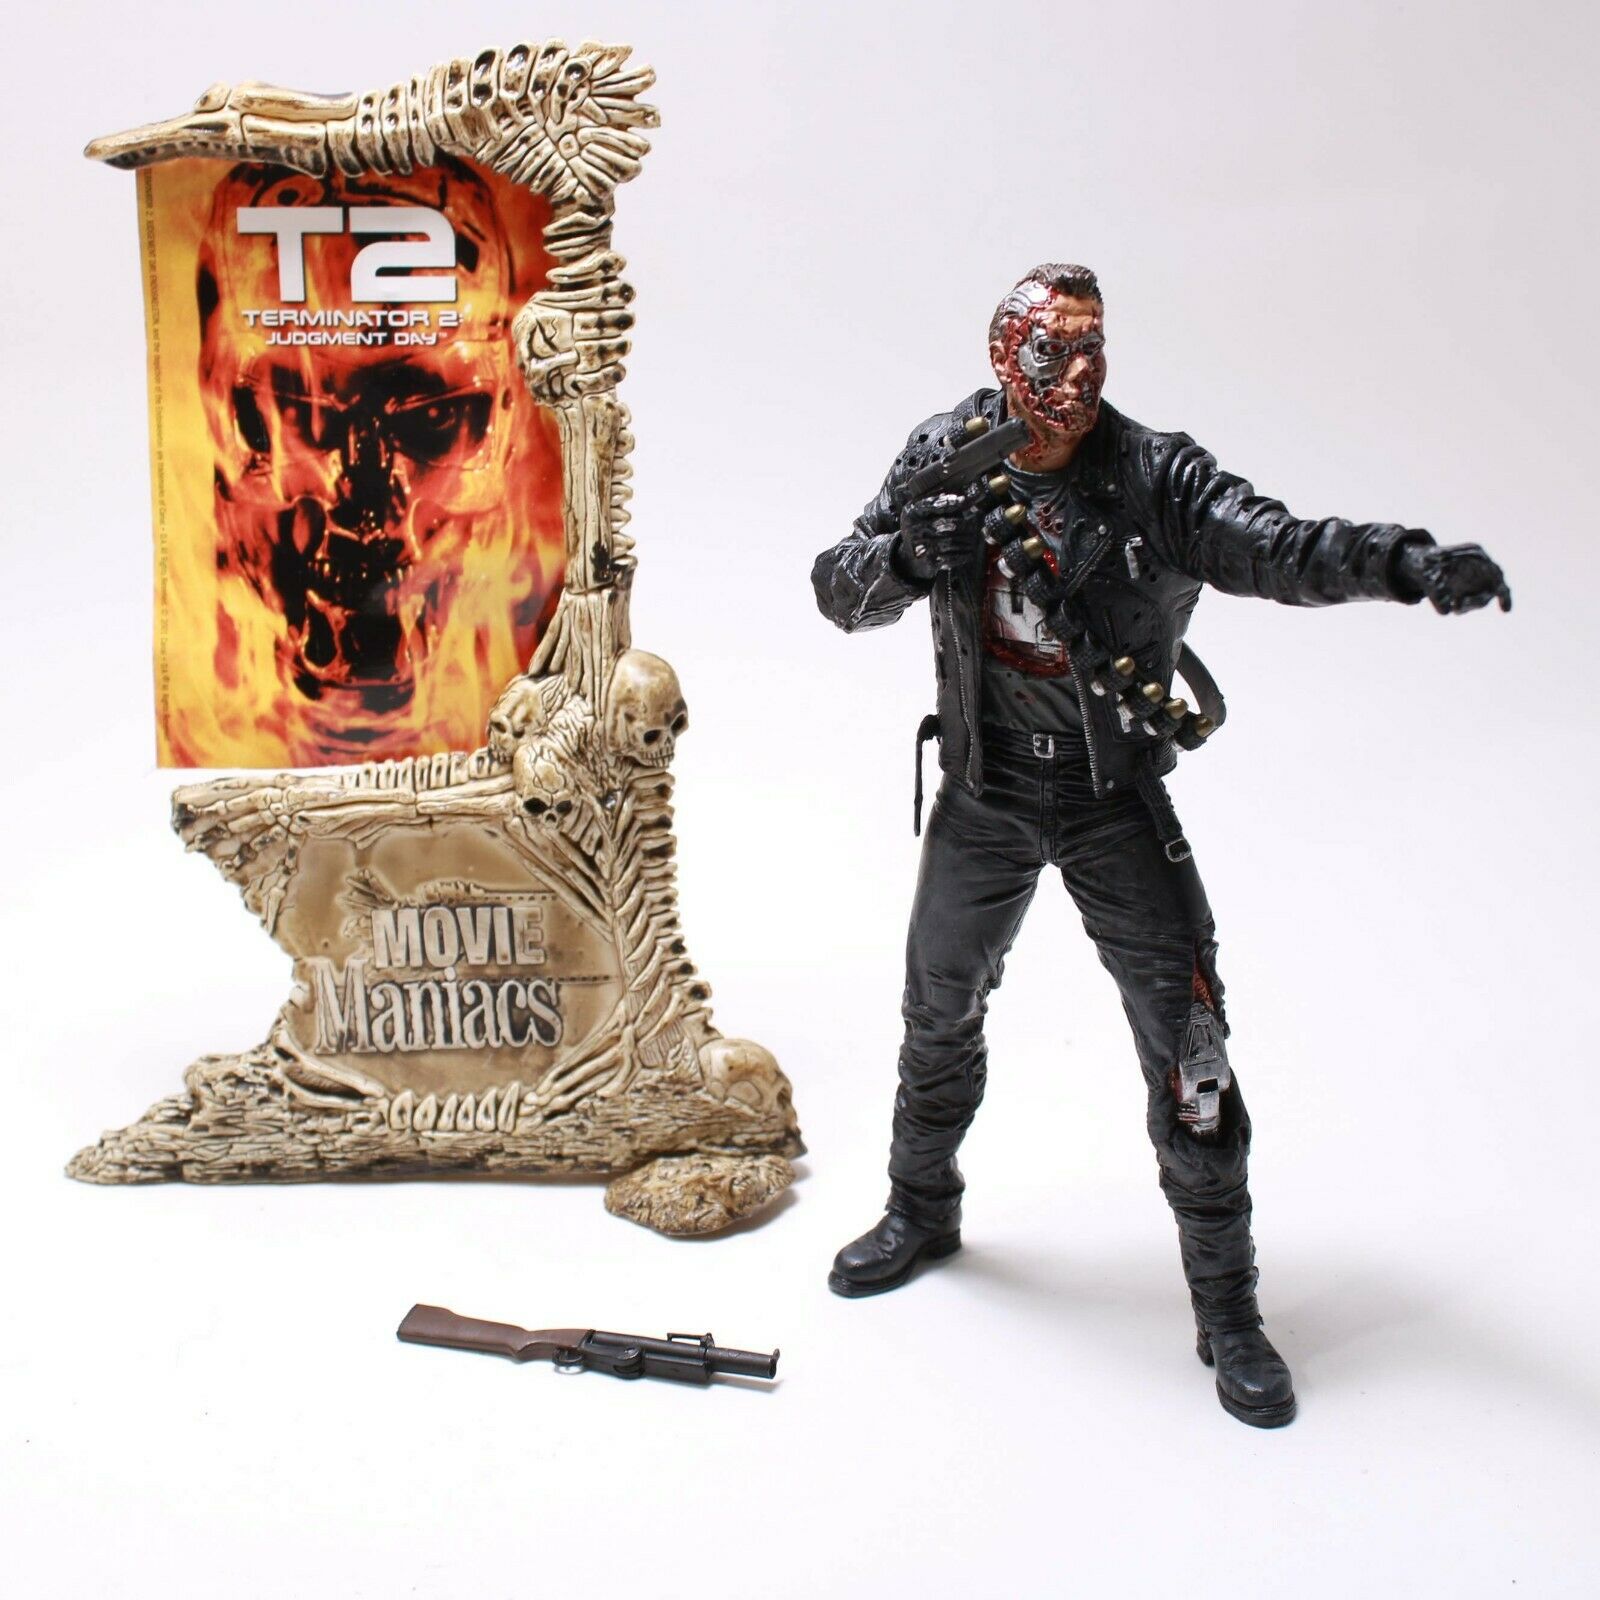 McFarlane Toys Terminator 2 T-800 - Movie Maniacs 4 Judgment Day